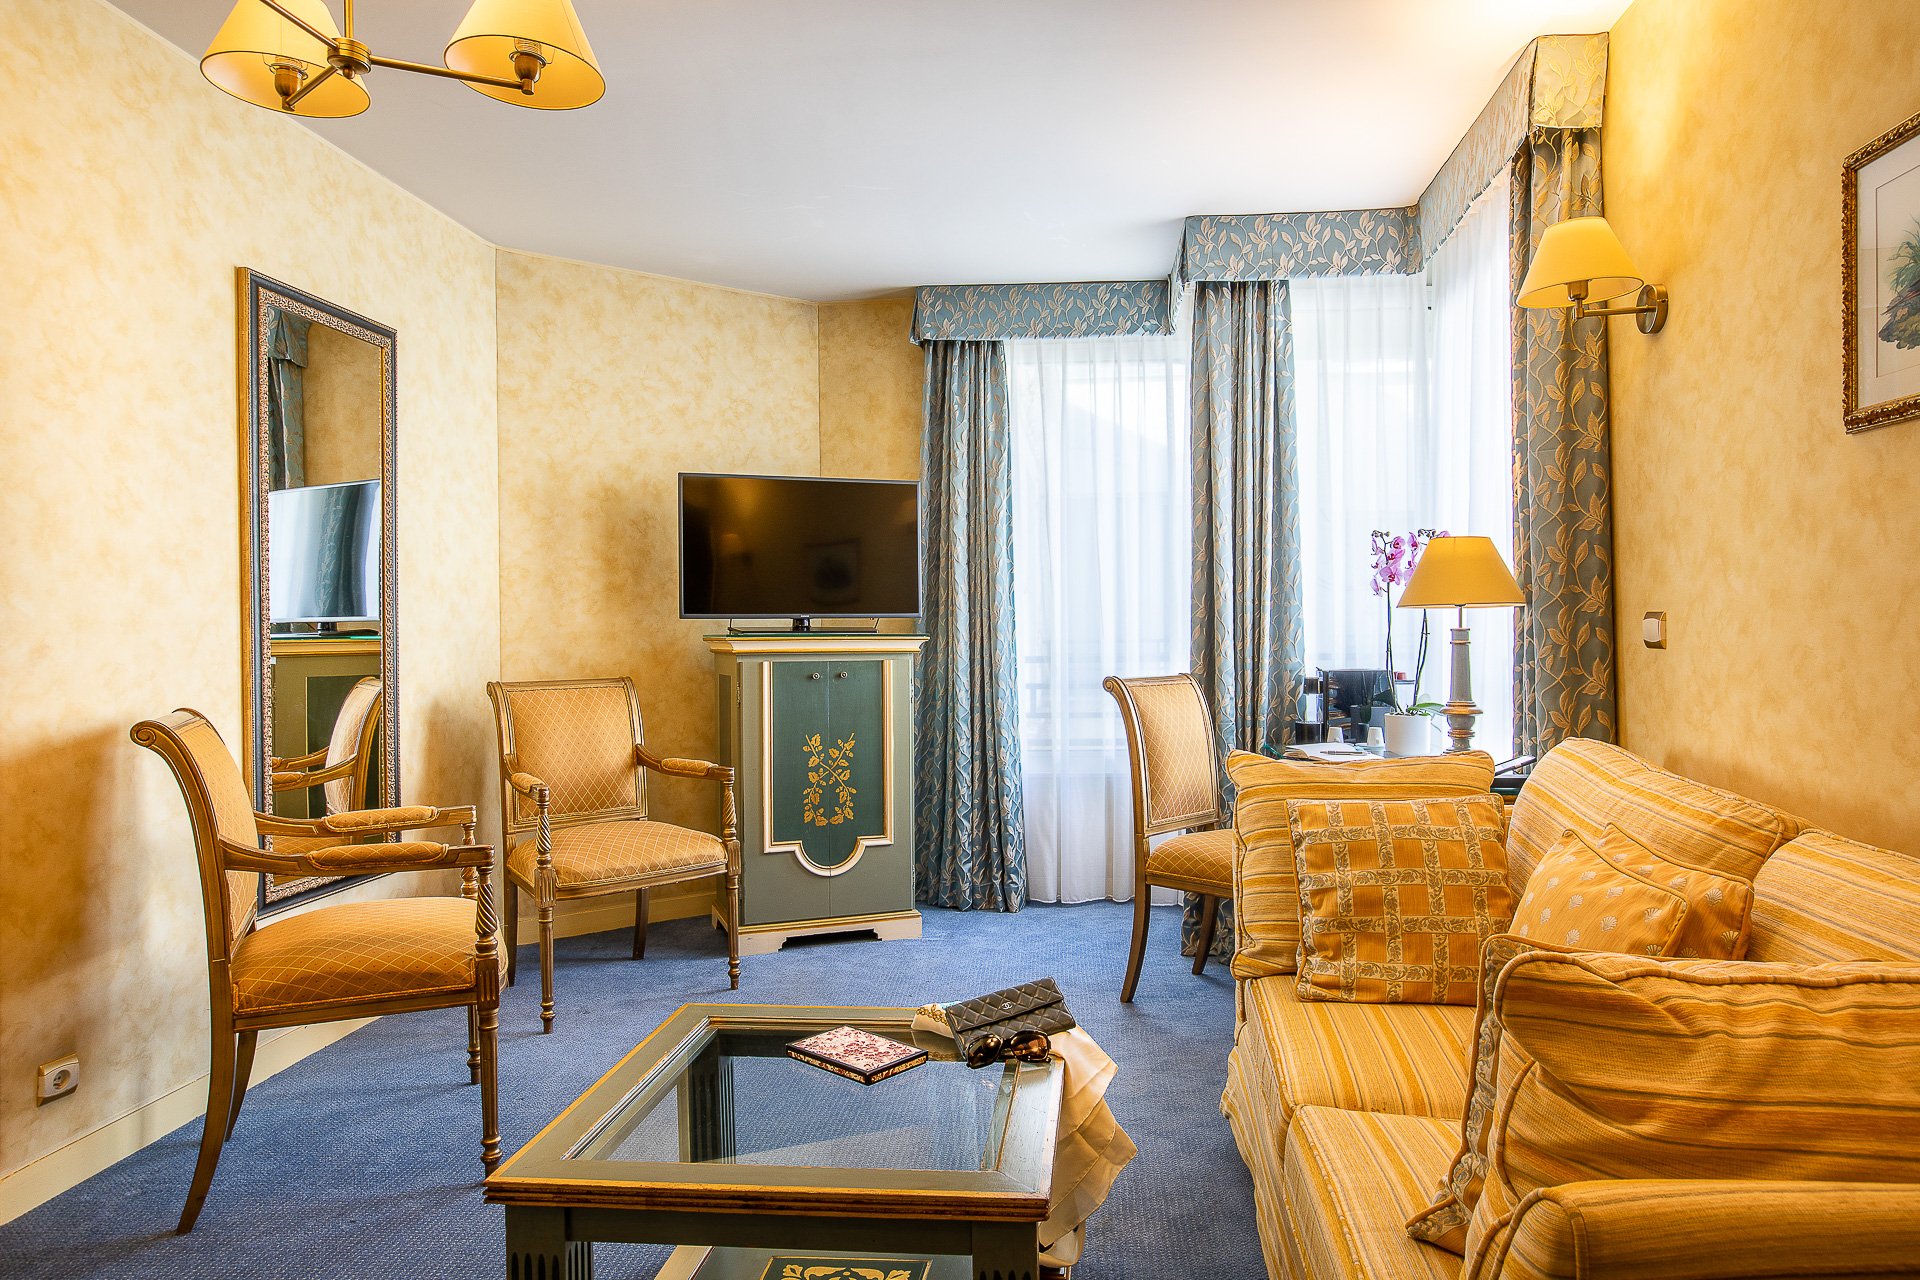 23/Chambres/JUNIOR SUITE/Villa Beaumarchais Hotel 4 etoiles - Junior Suite Marais Paris 75003.jpg